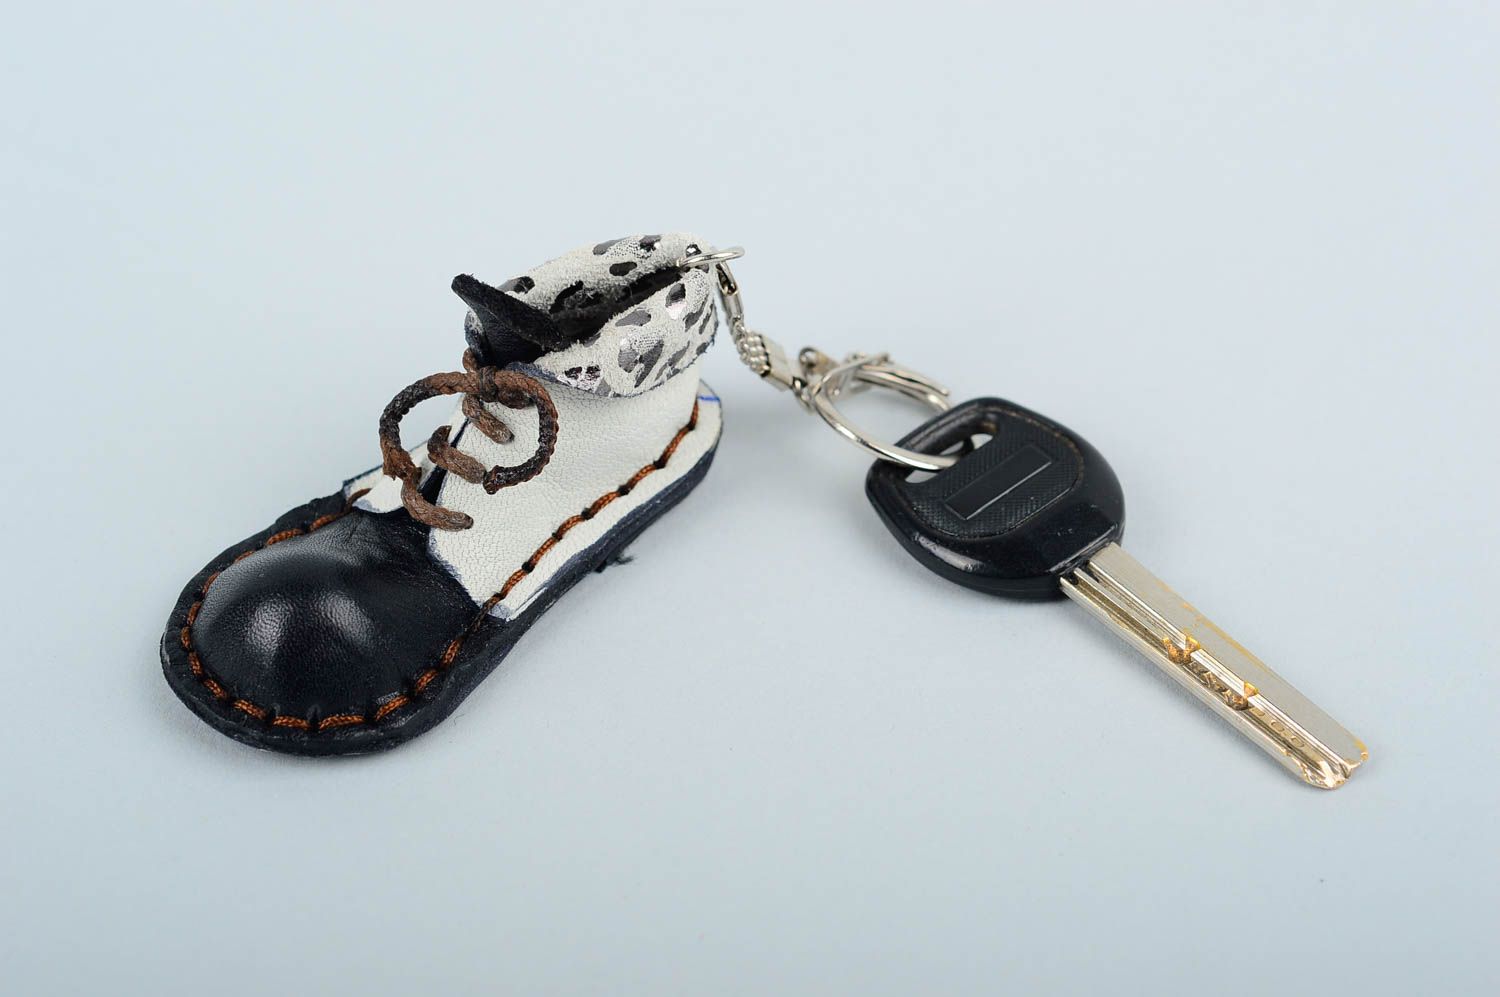 car keychain ideas